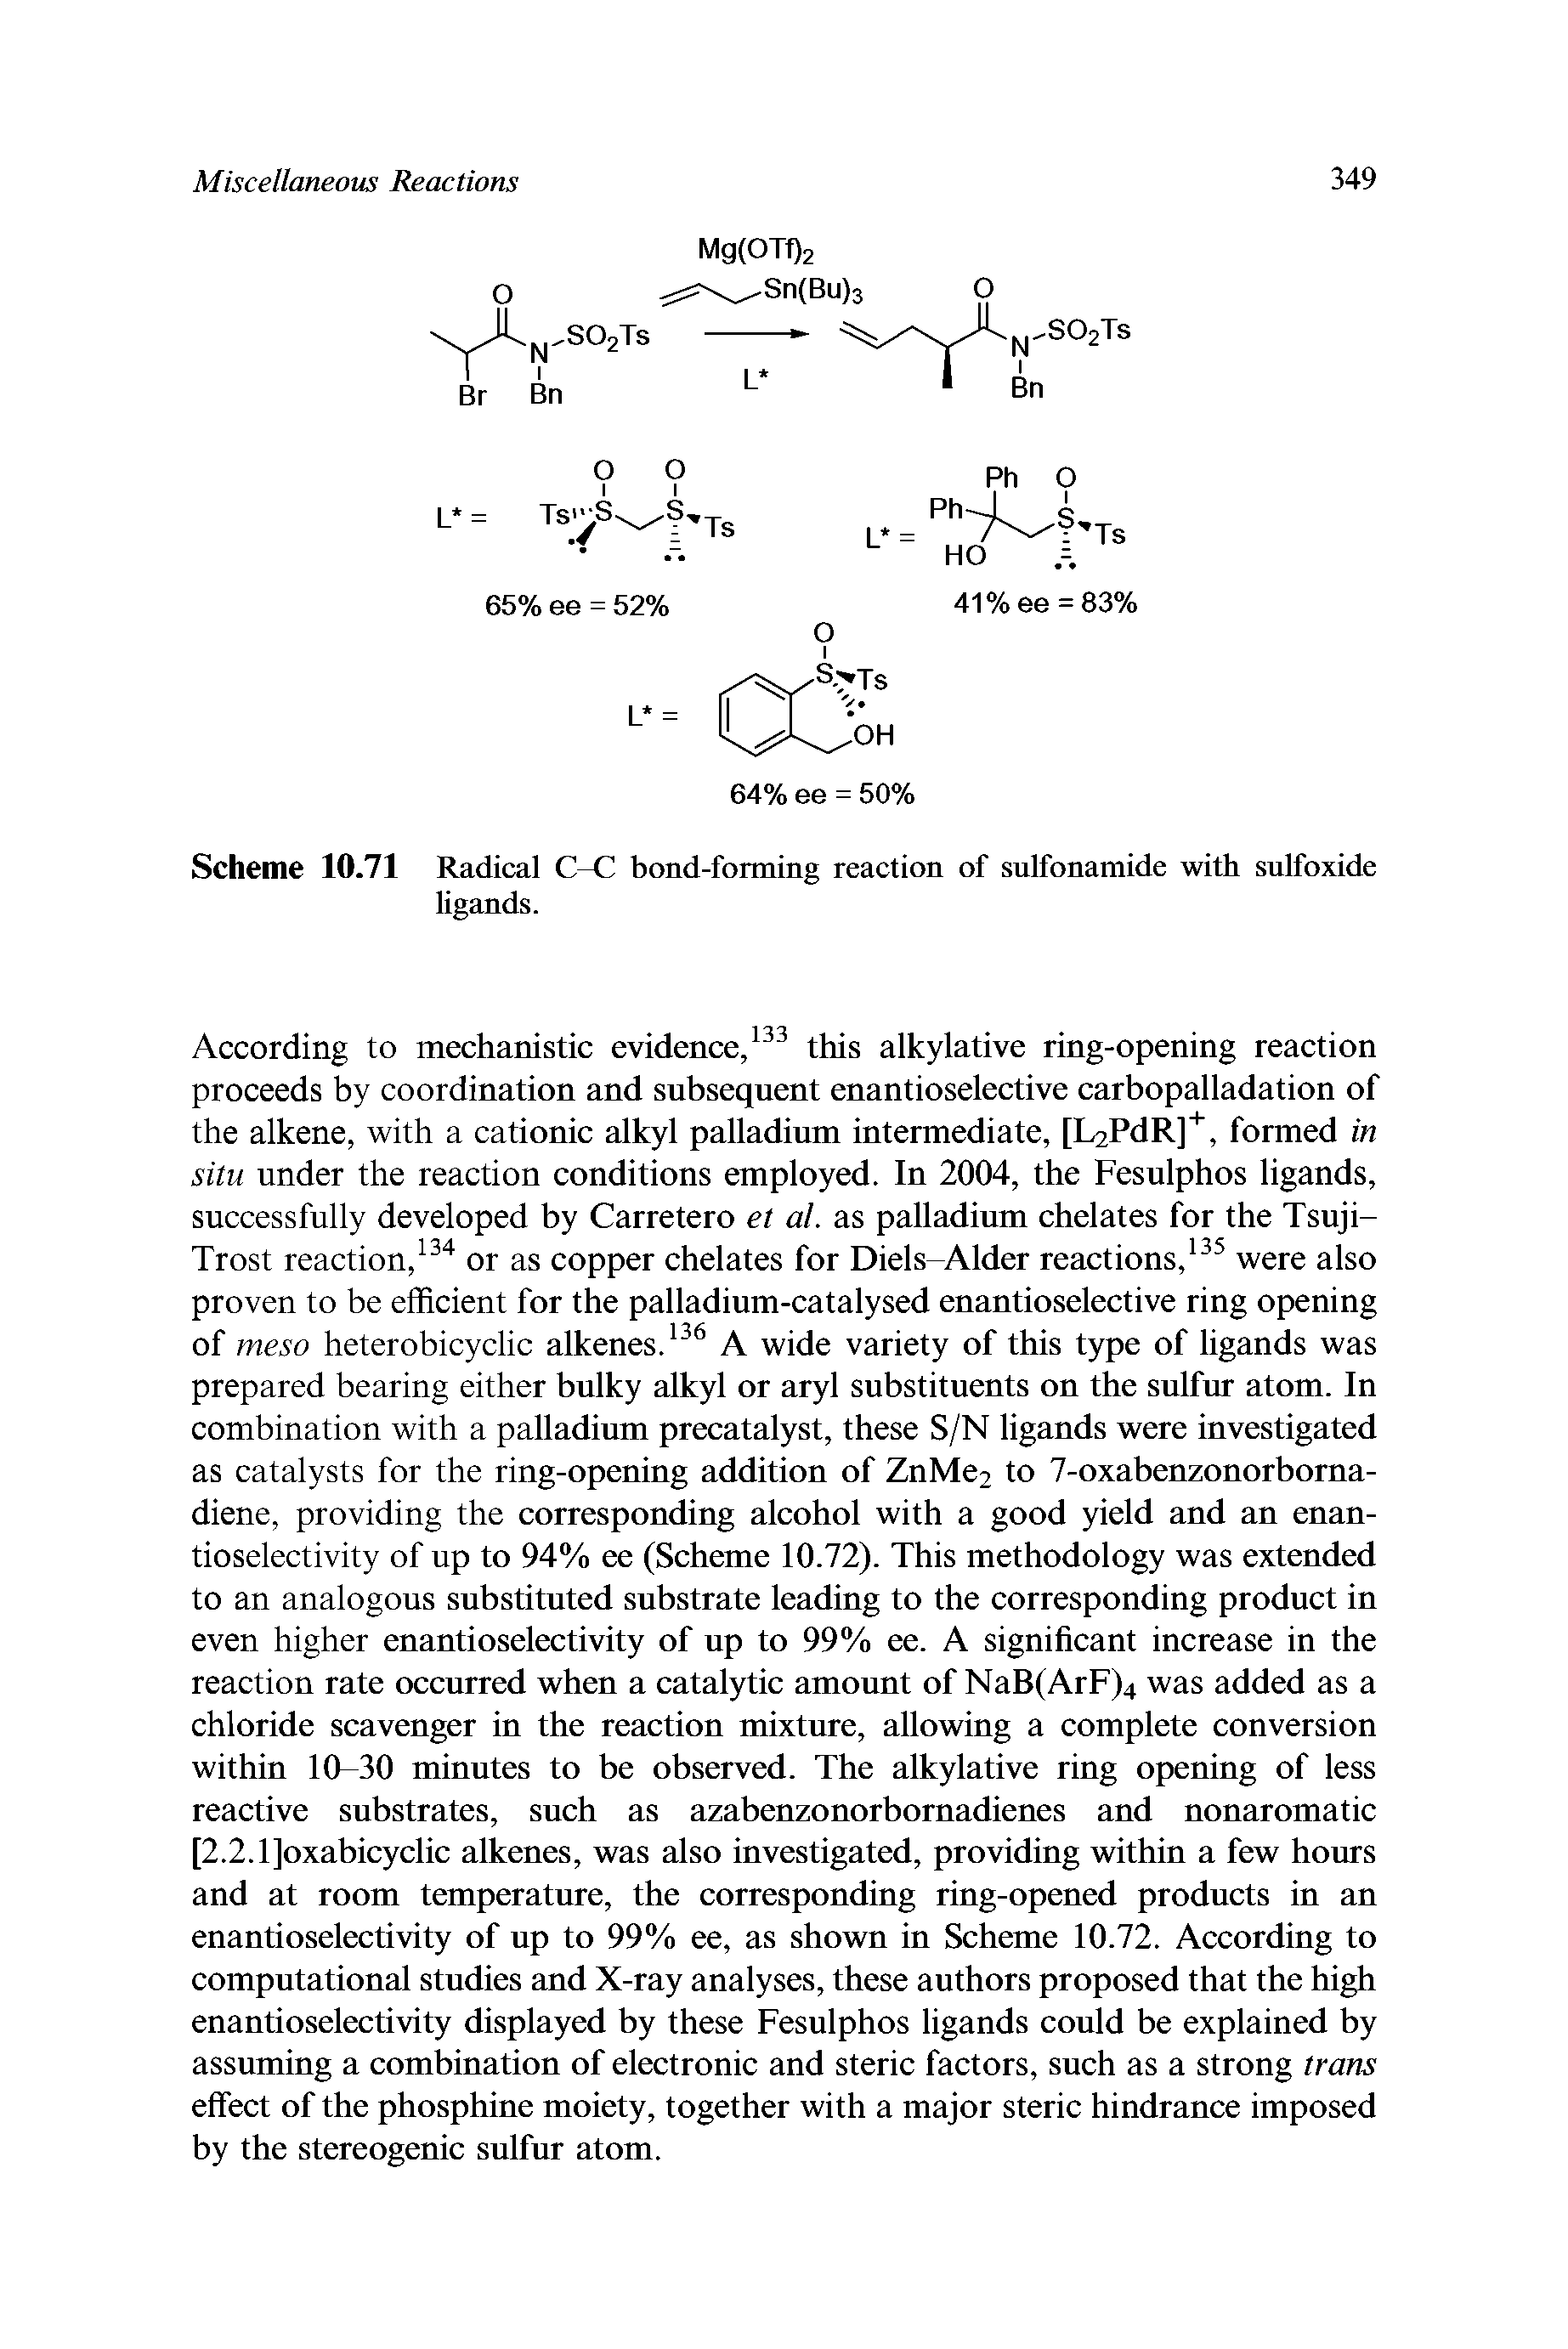 Scheme 10.71 Radical C-C bond-forming reaction of sulfonamide with sulfoxide ligands.